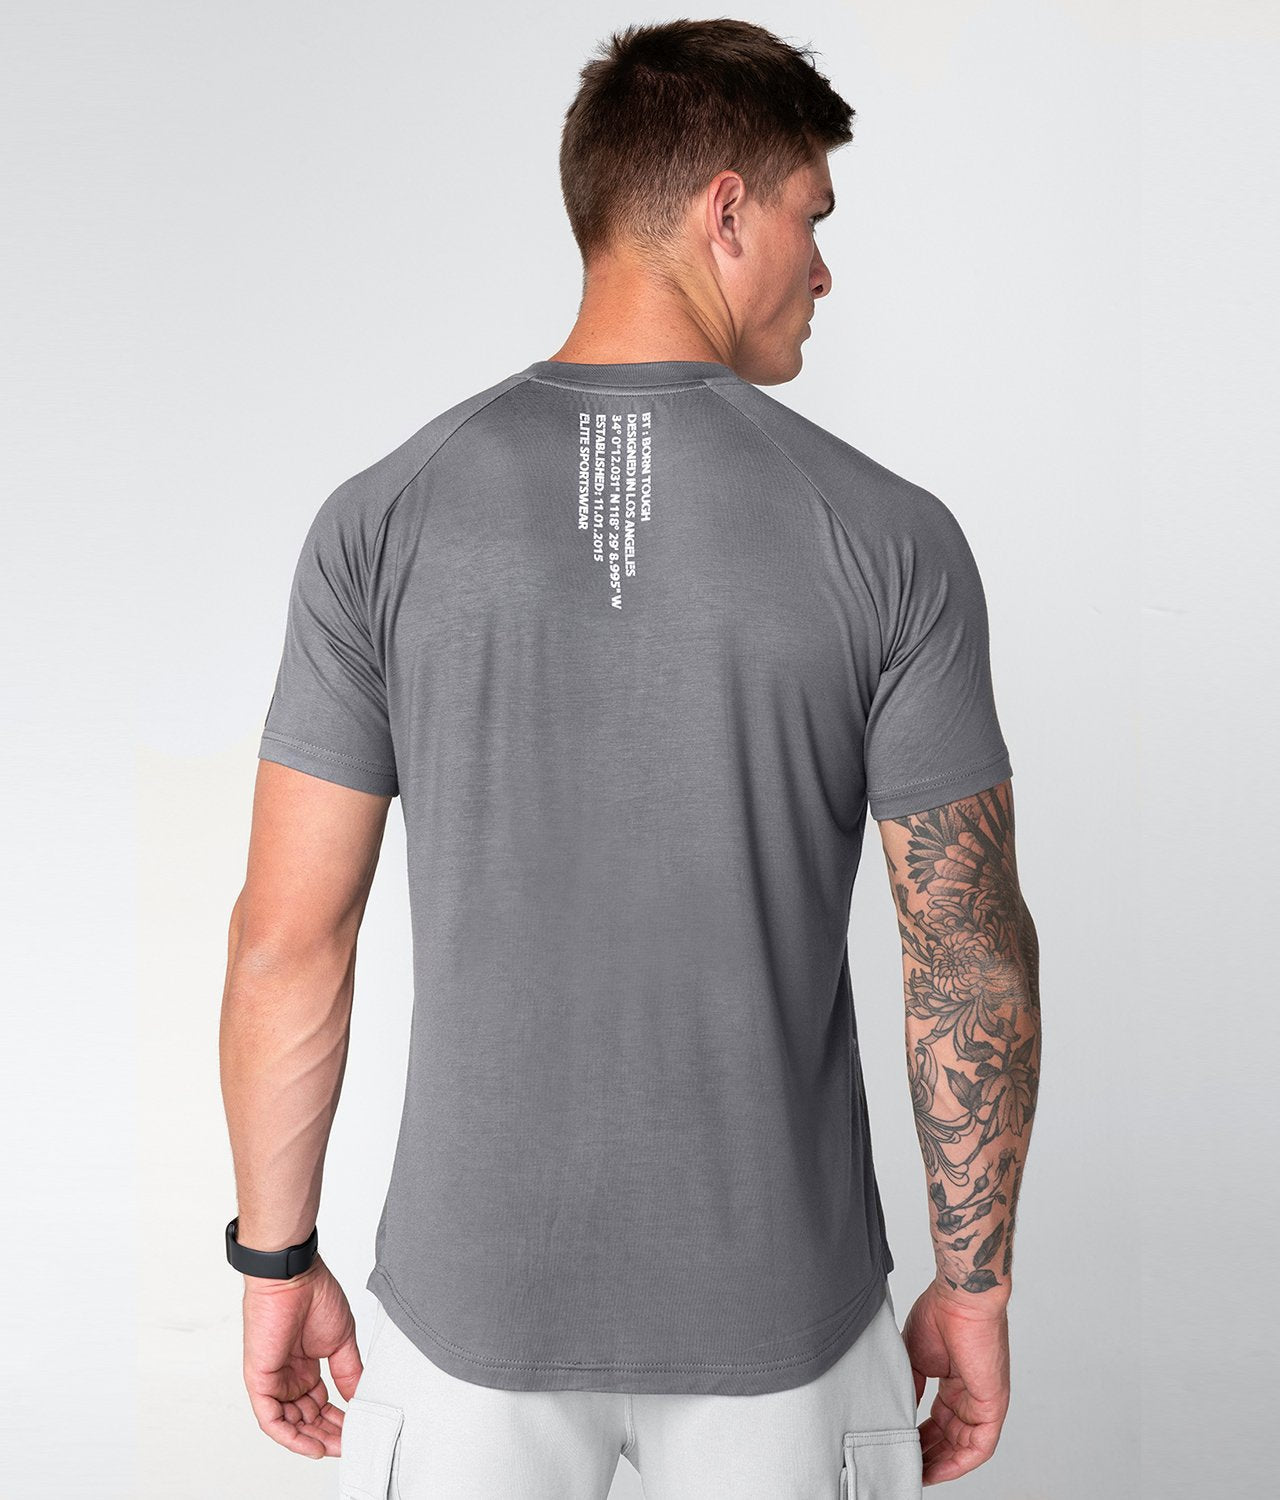 Born Tough Core Fit Short Sleeve Gray Gym Workout Shirt For Men